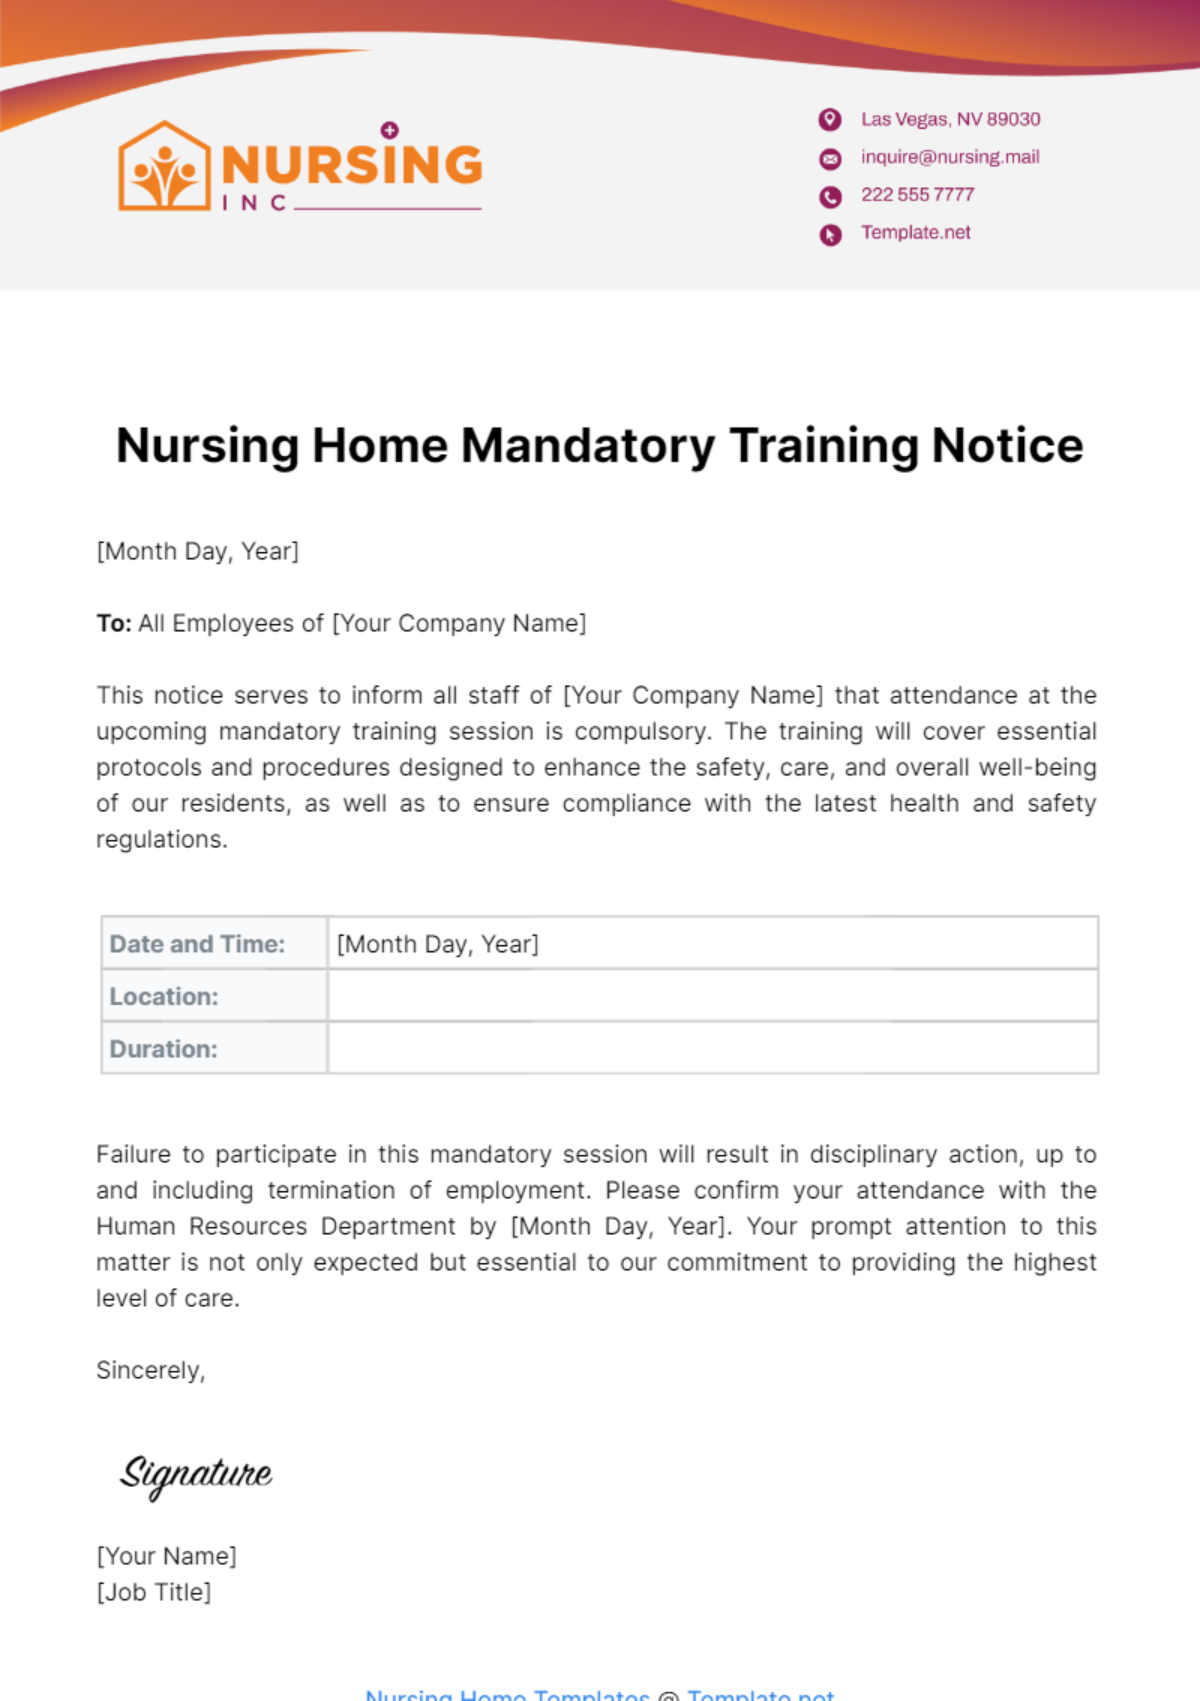 Nursing Home Mandatory Training Notice Template